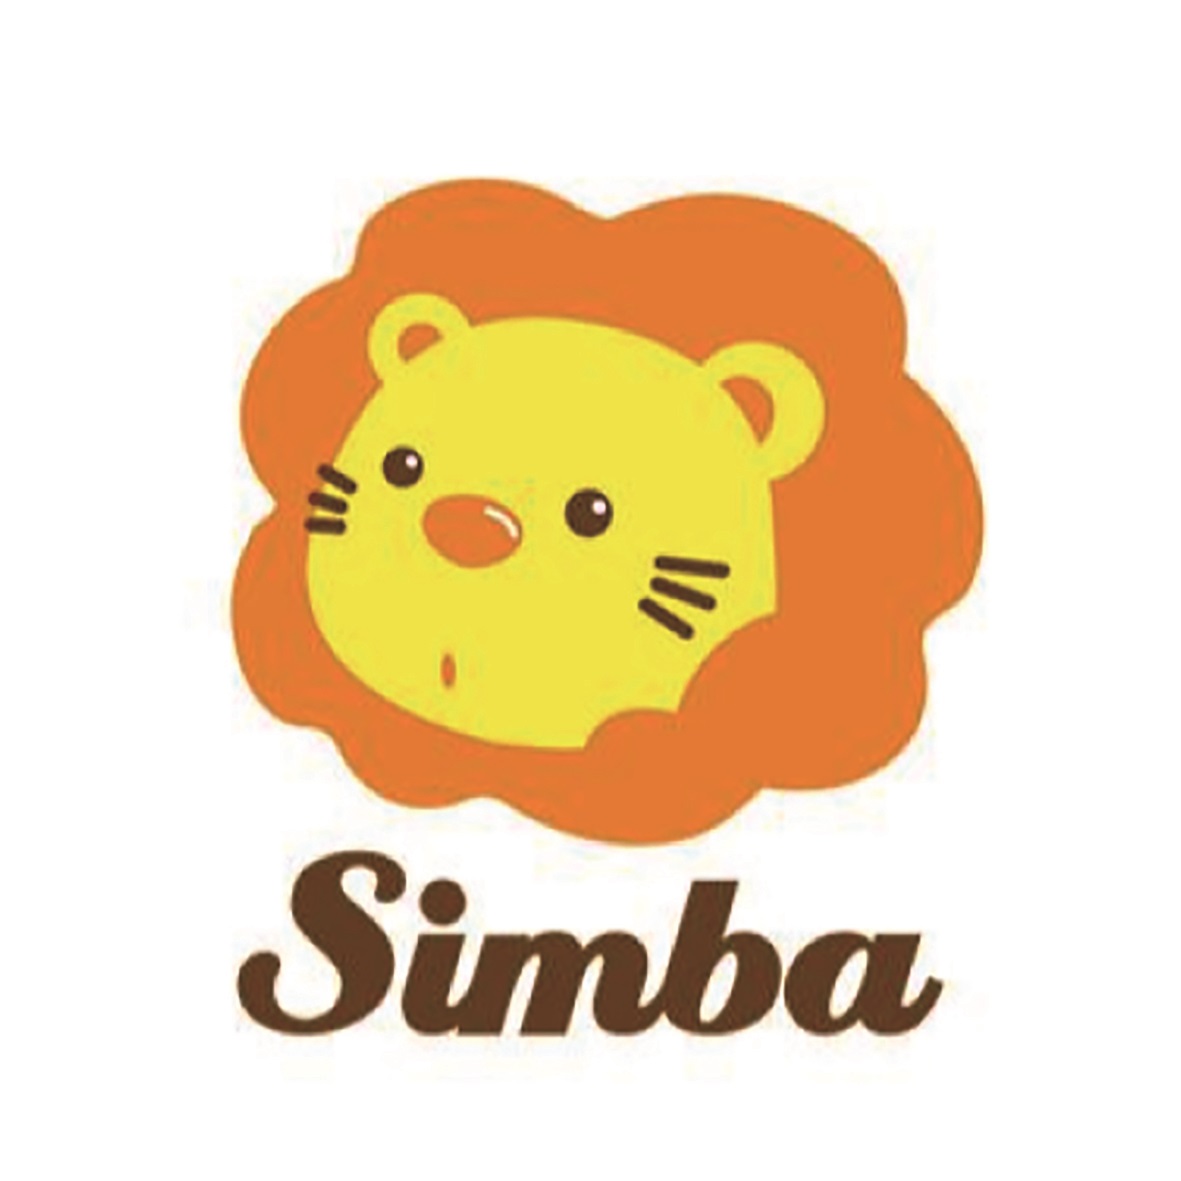 奶娃simba